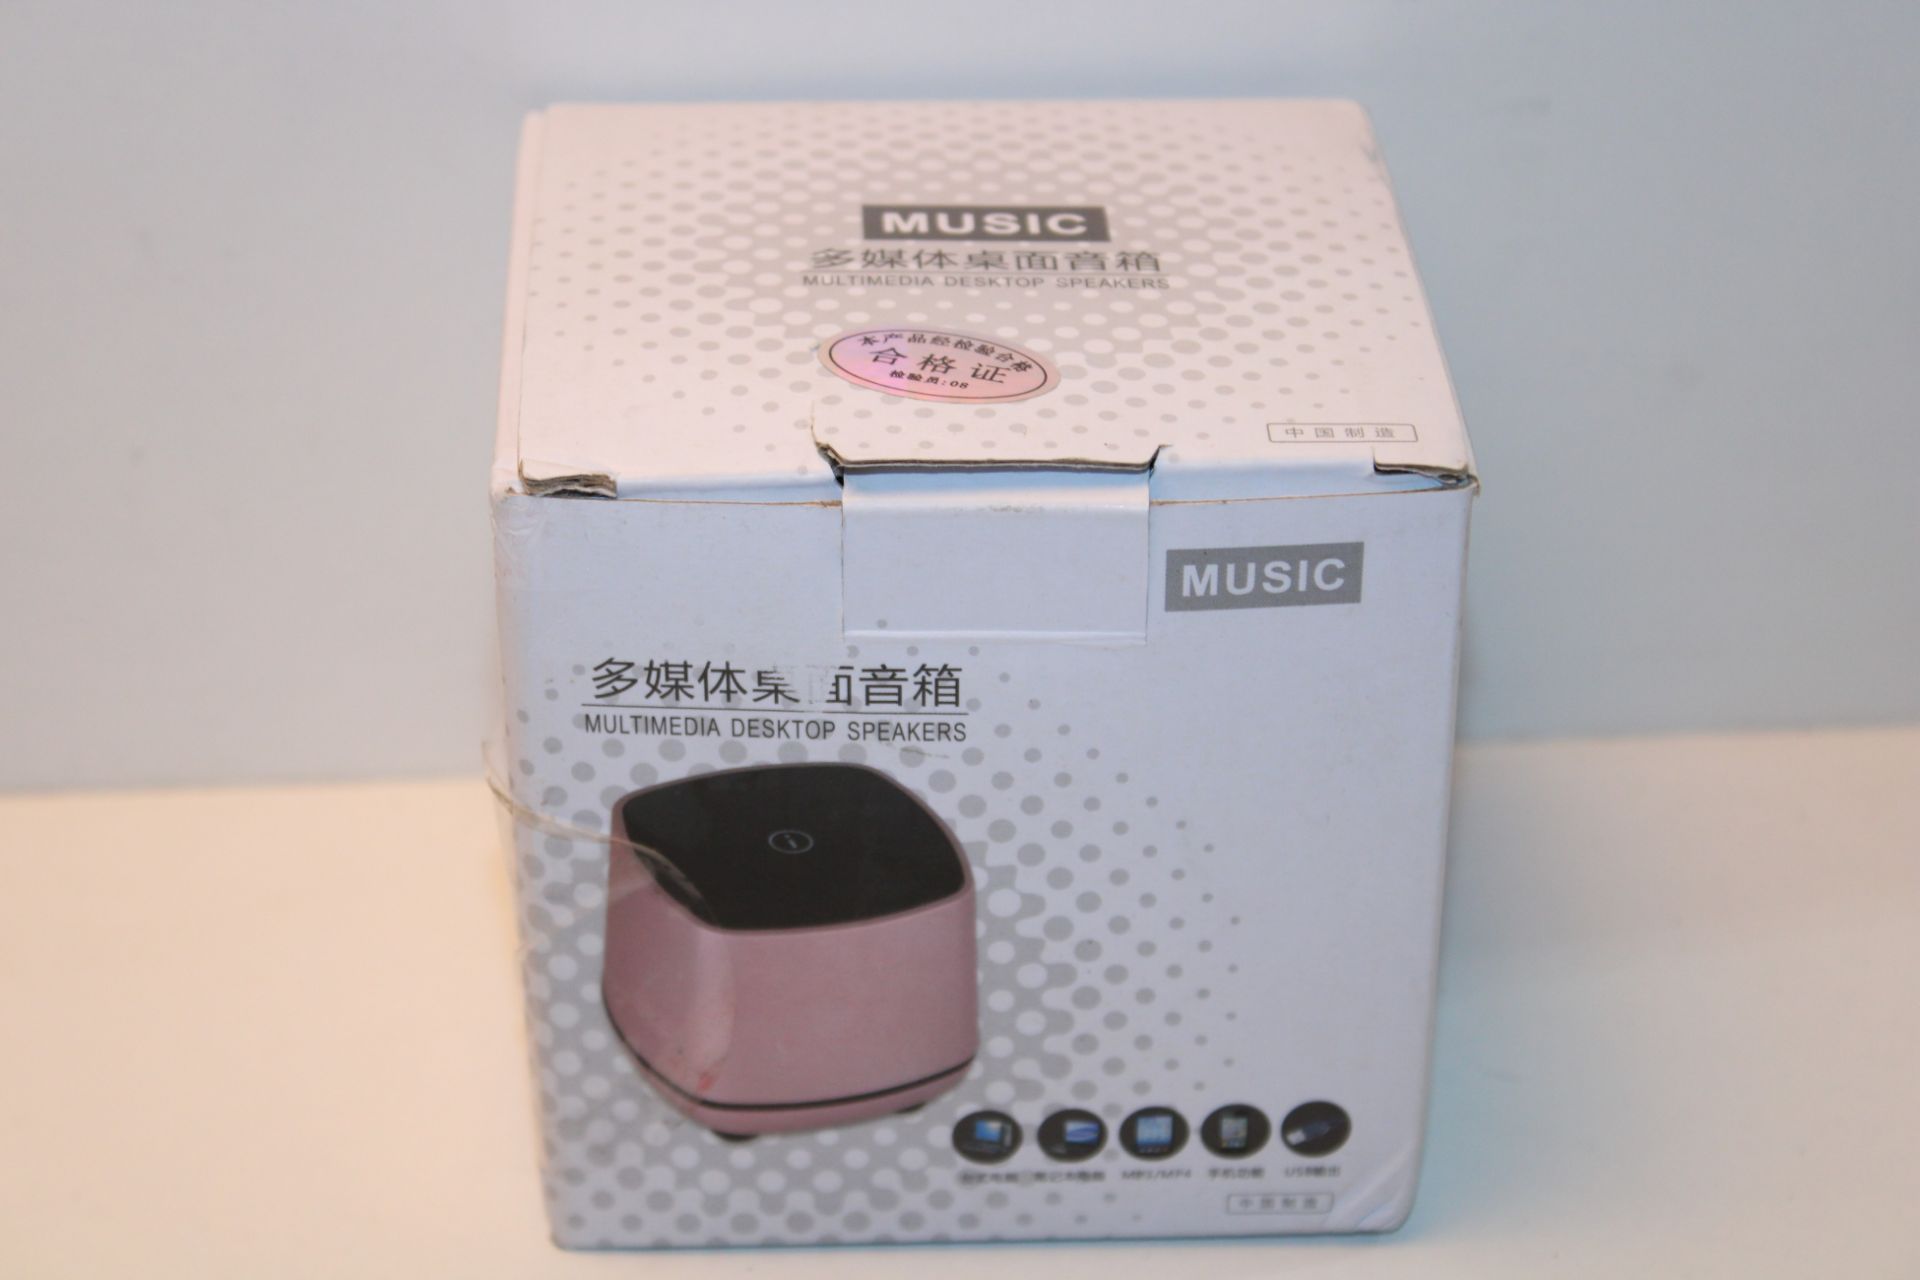 Accod Mini Desktop Speaker USB Powered and 3.5mm Audio Input Wired Computer Speaker Portable